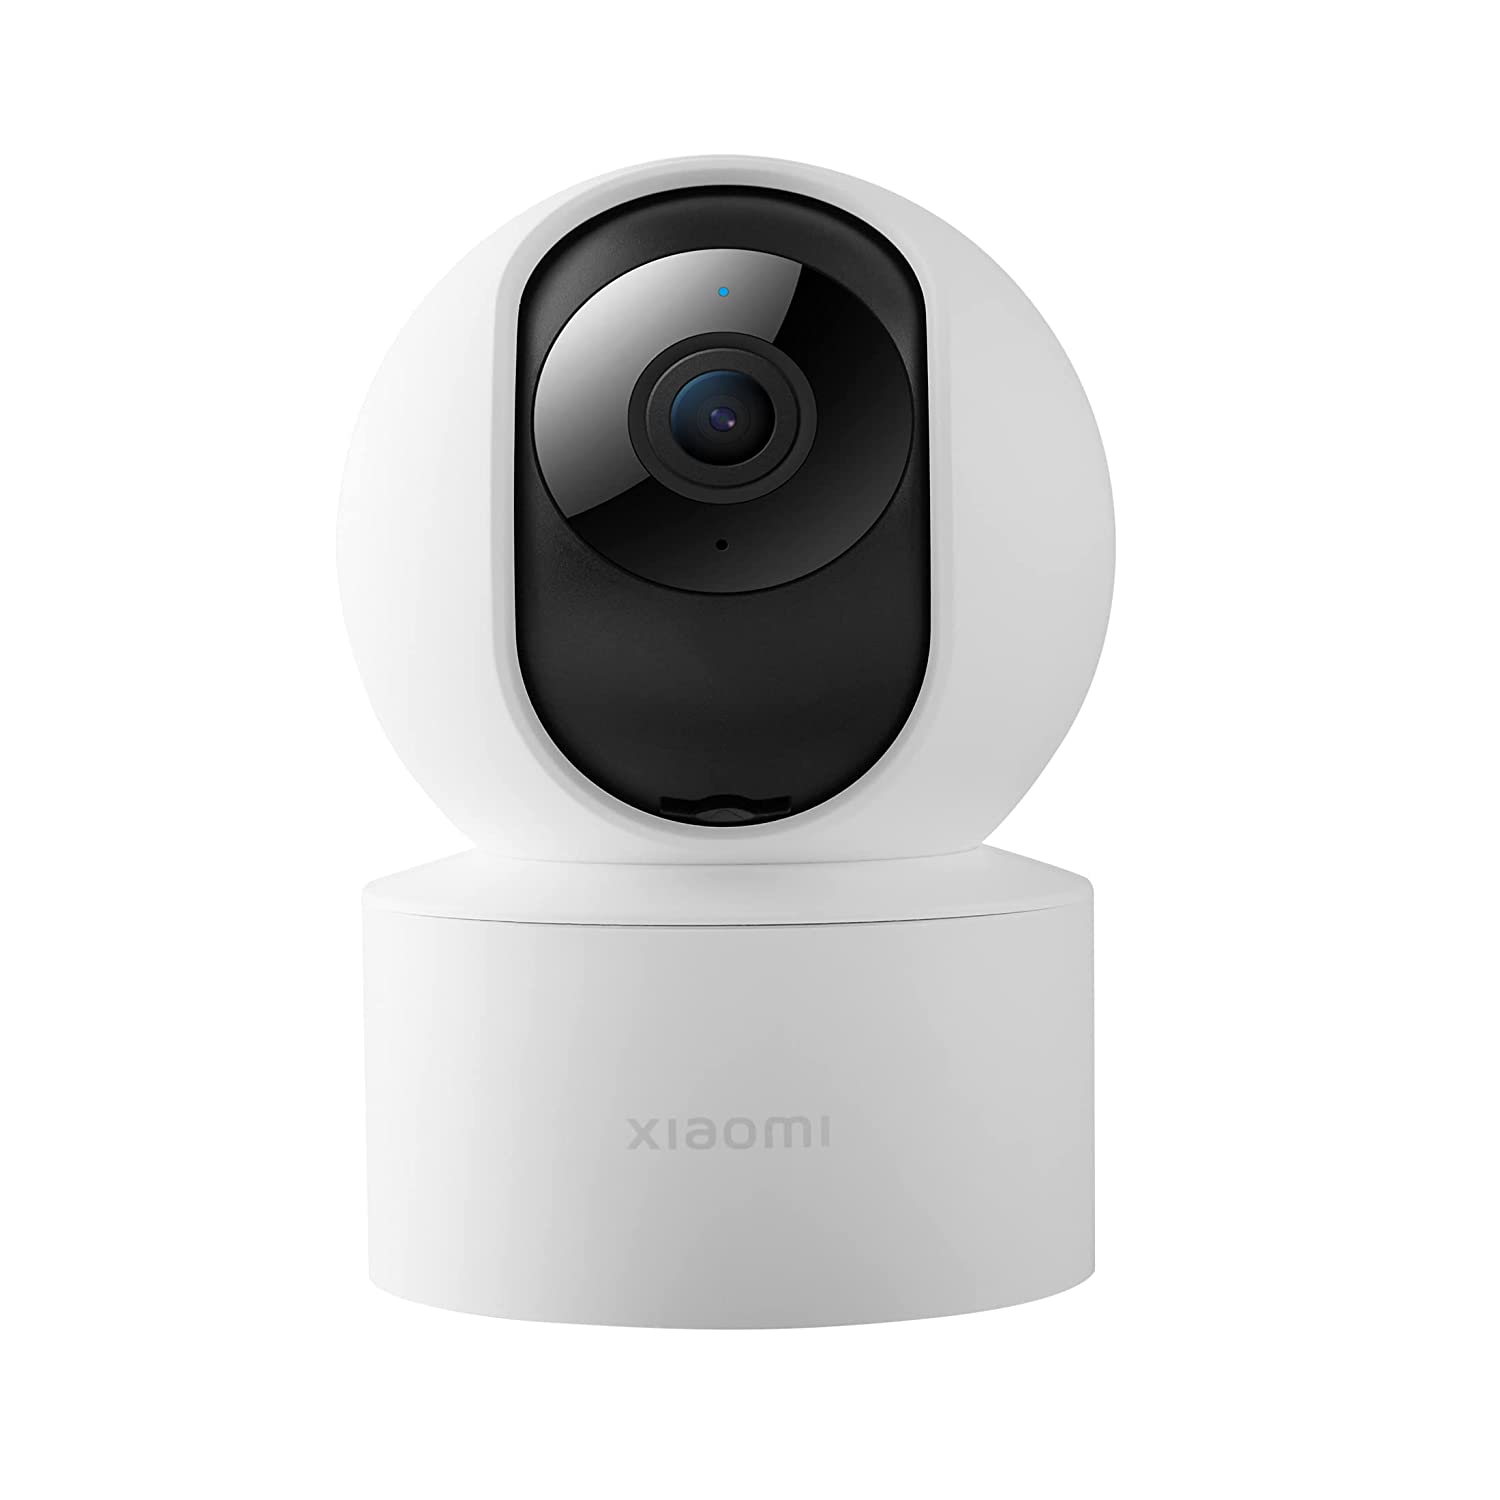  MI Xiaomi Wireless Home Security Camera